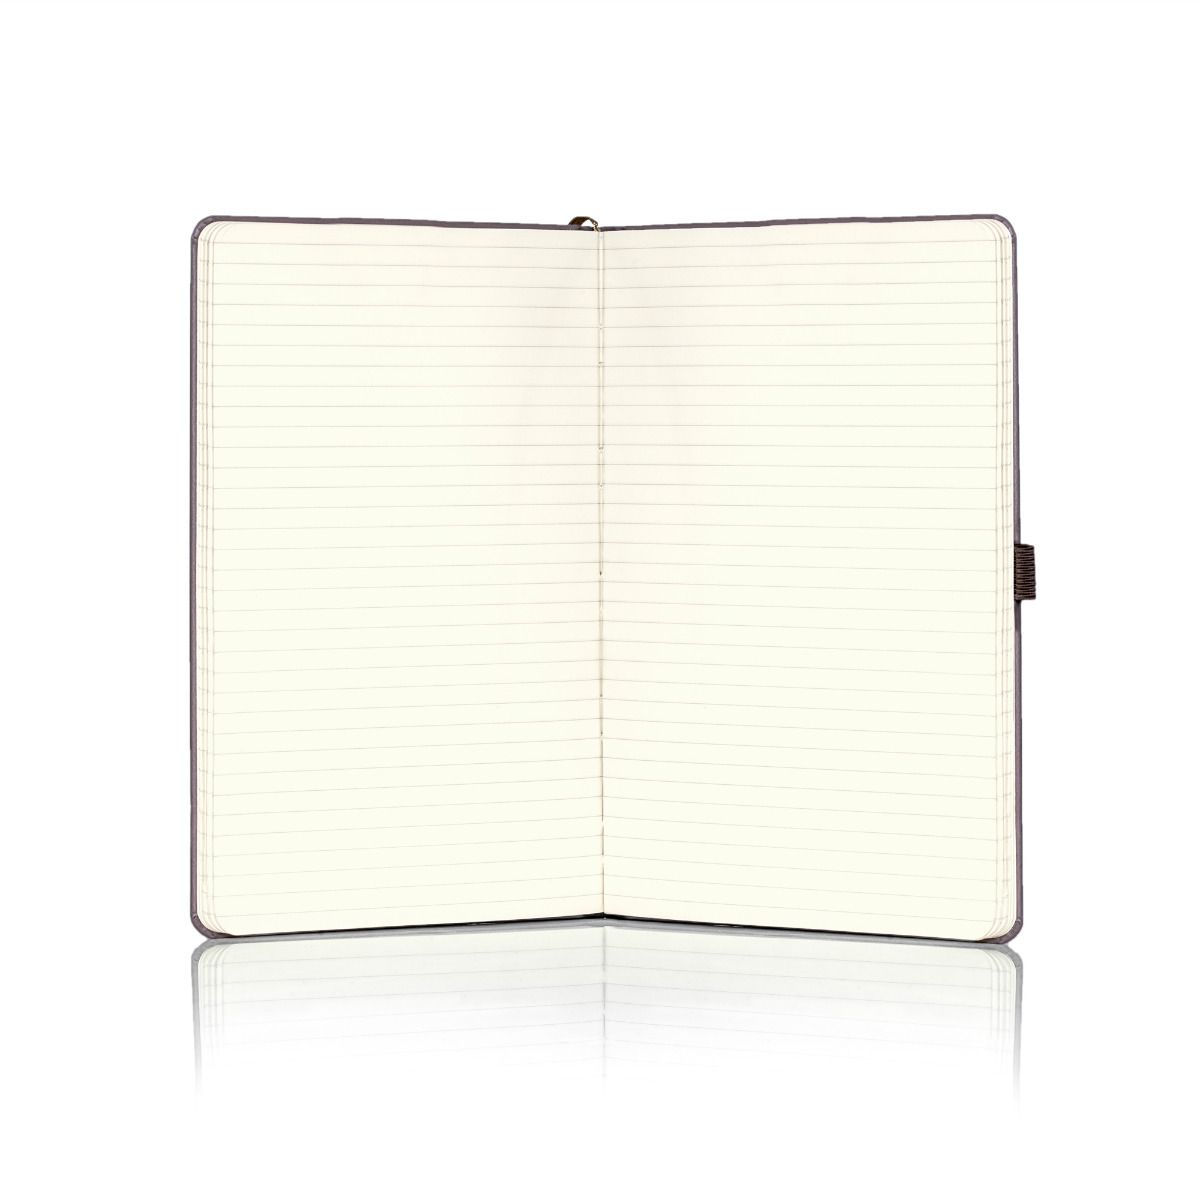 Oud-West Notebook Castelli - Bellamyplein